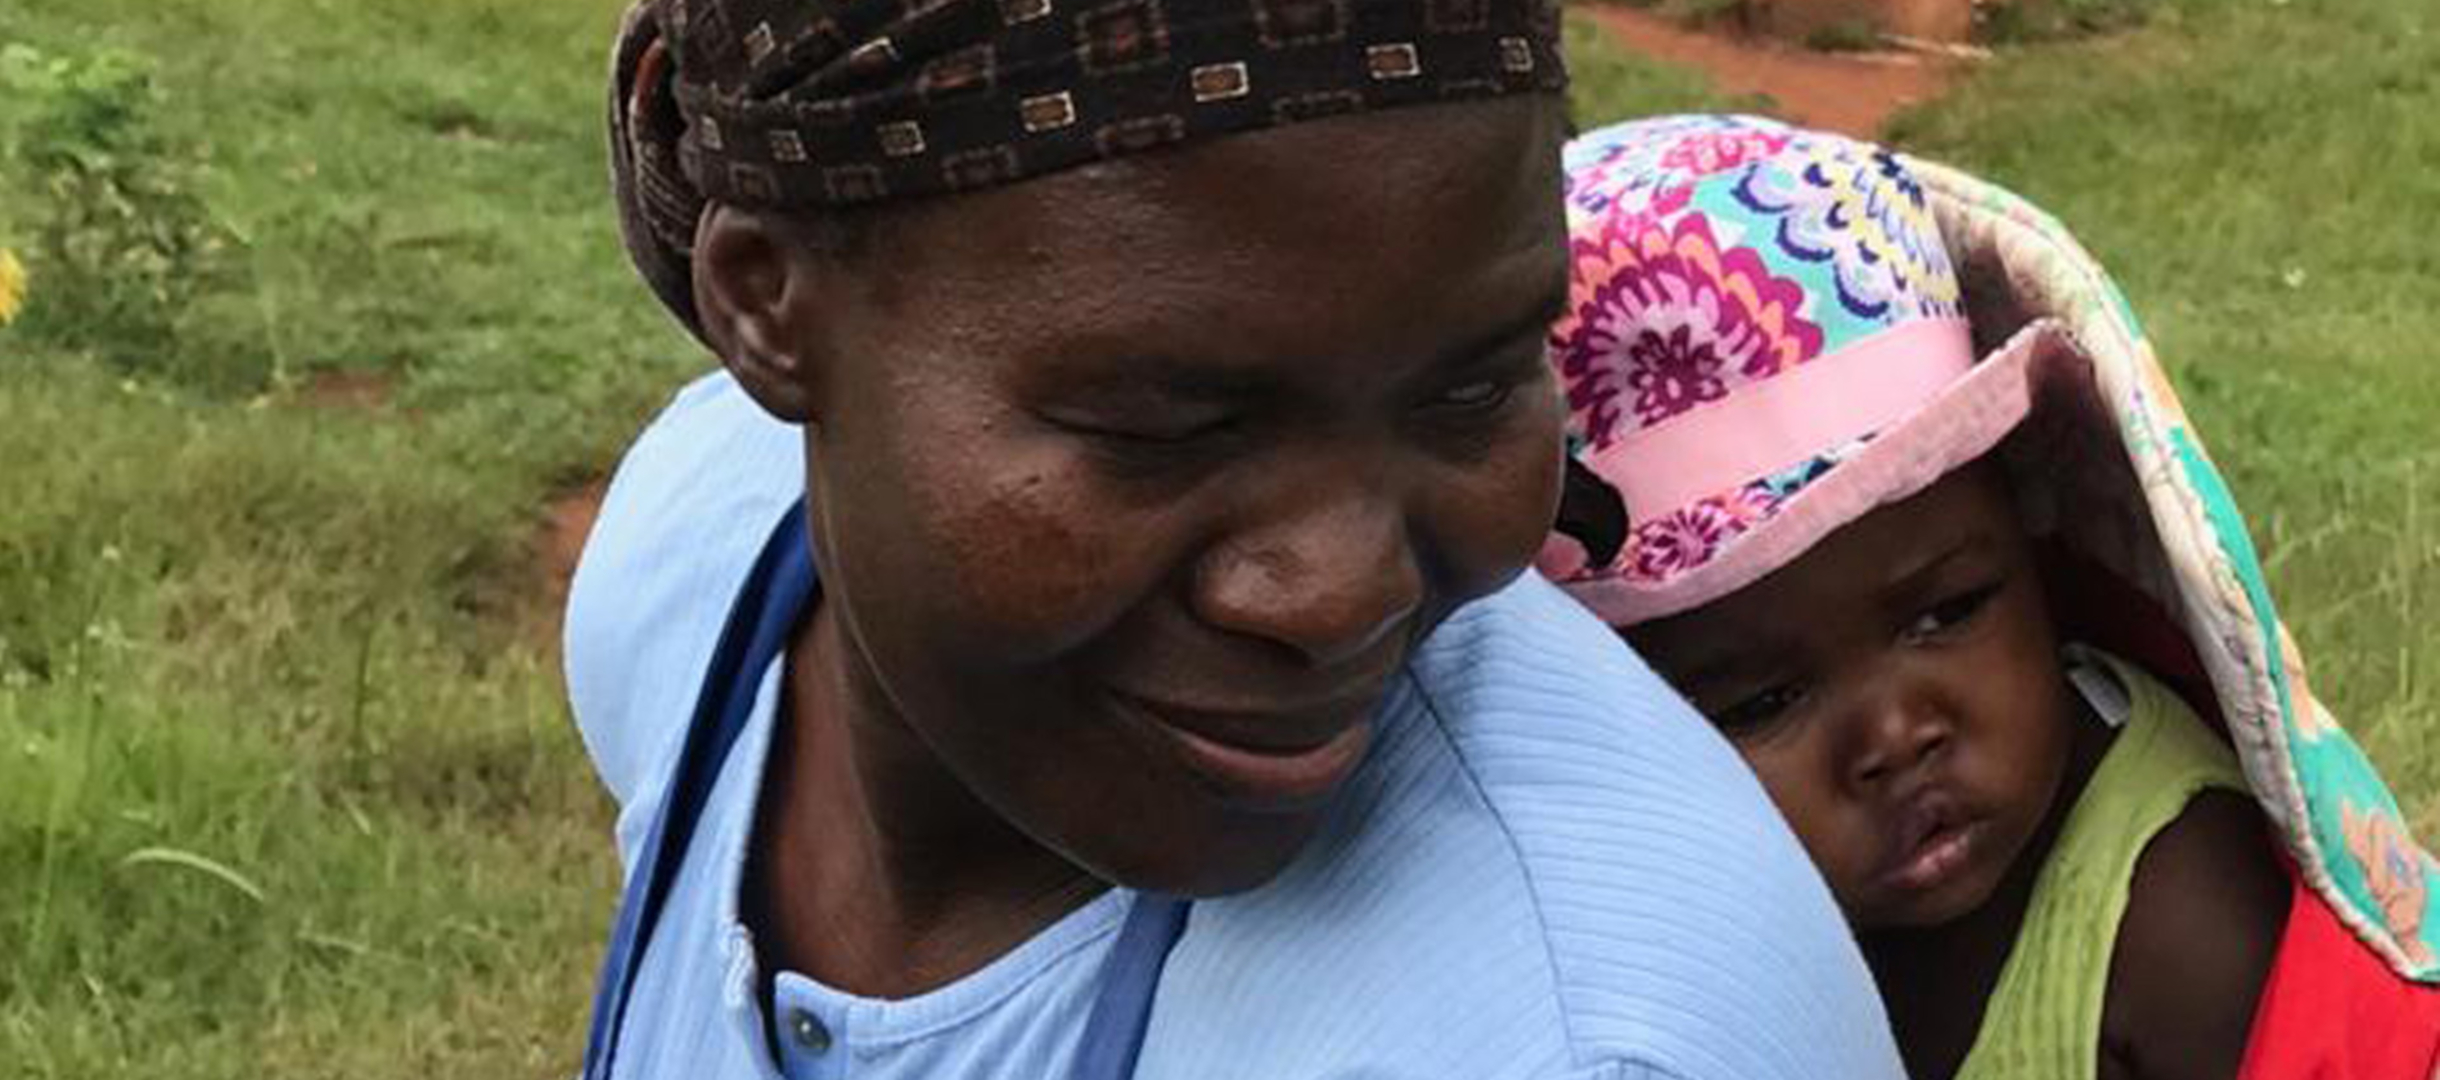 Mutter mit Kind in Eswatini